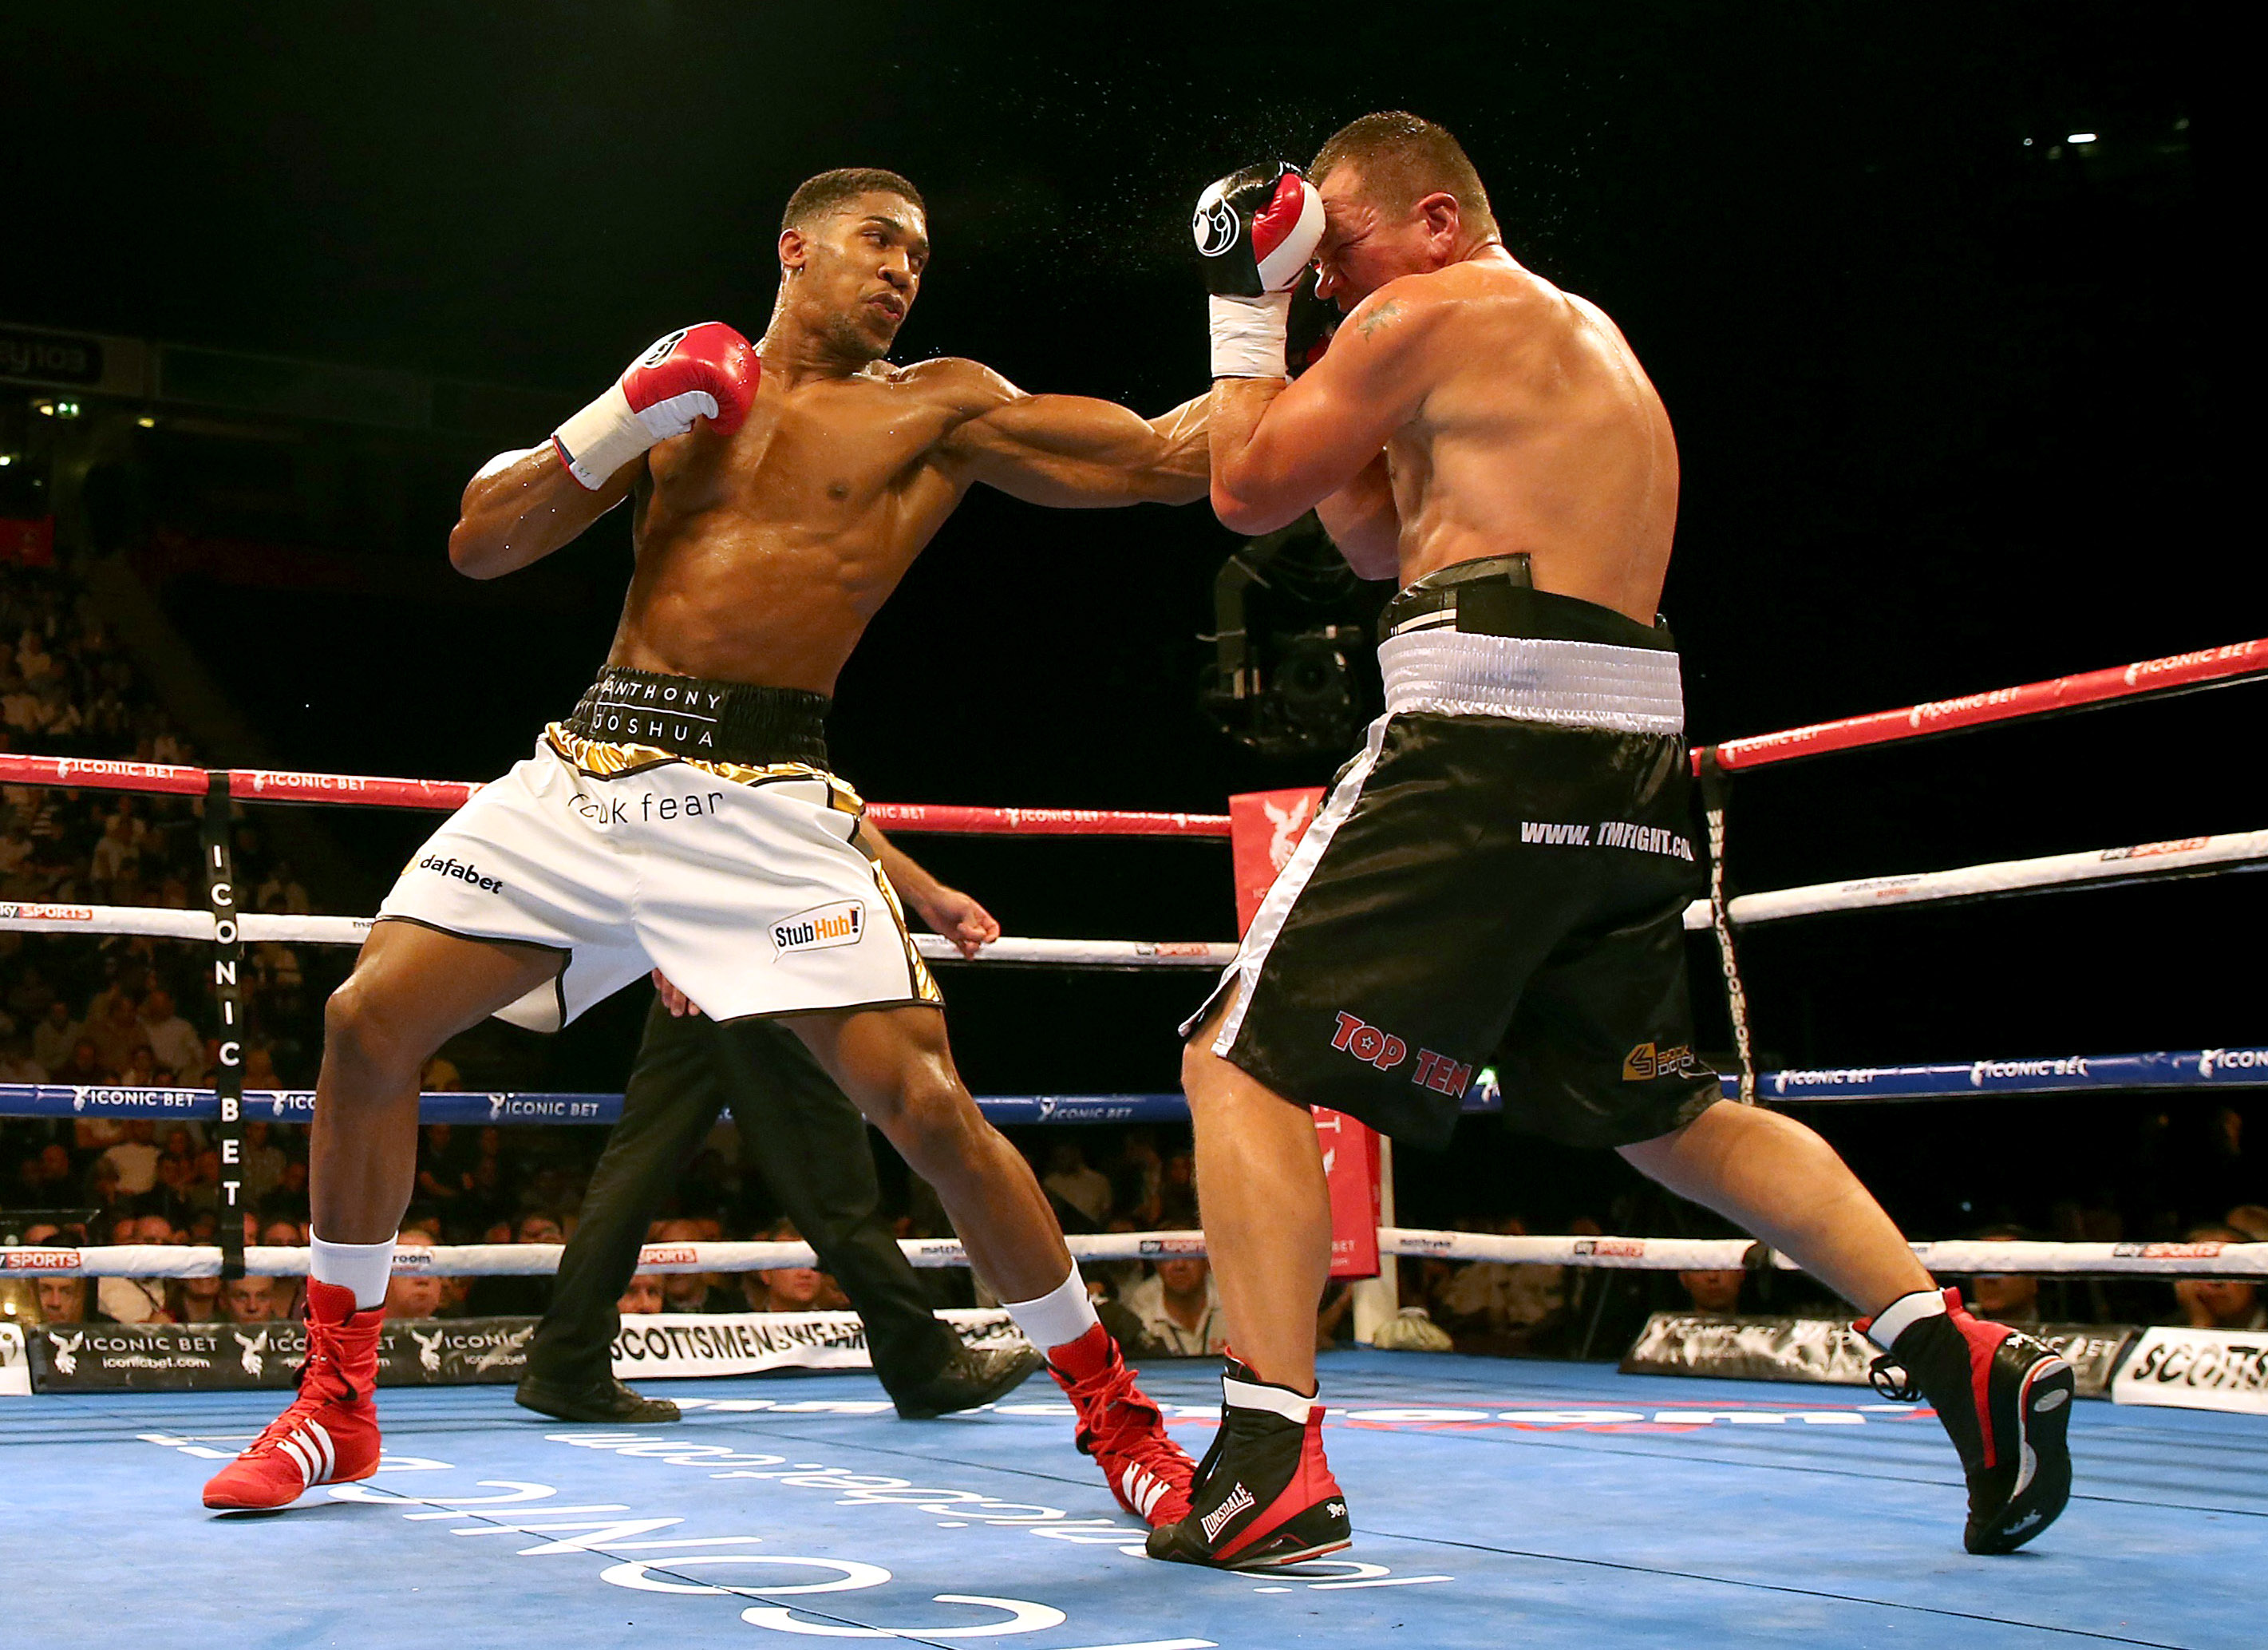 Boxing at Phones 4u Arena in Manchester